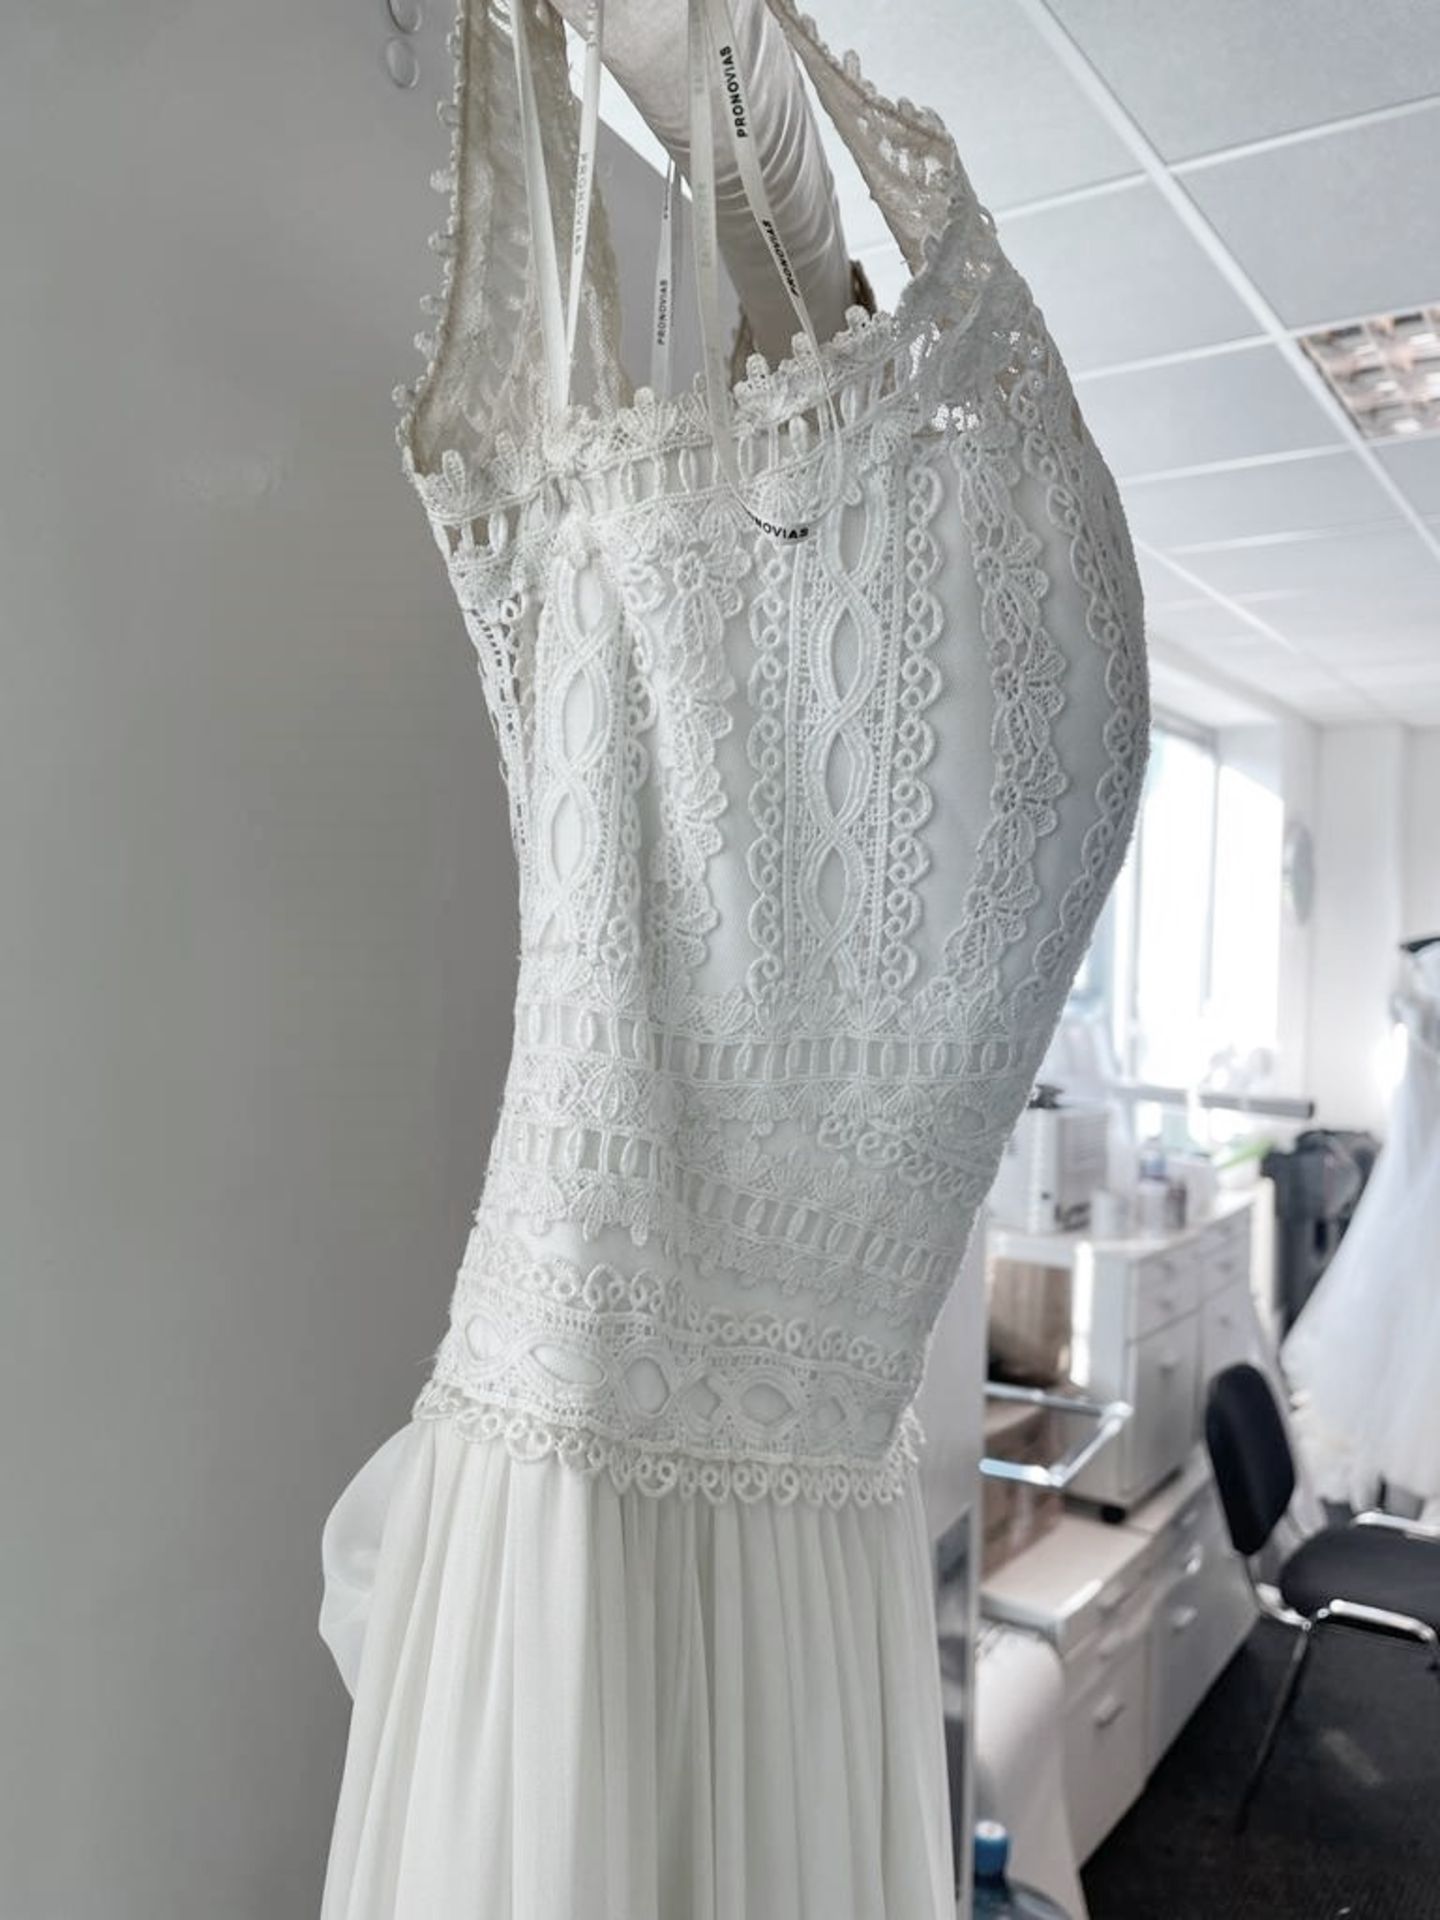 1 x PRONOVIAS 'Dramia' Designer Crocheted Lace Wedding Dress Bridal Gown, With Chiffon Gathered - Image 15 of 20